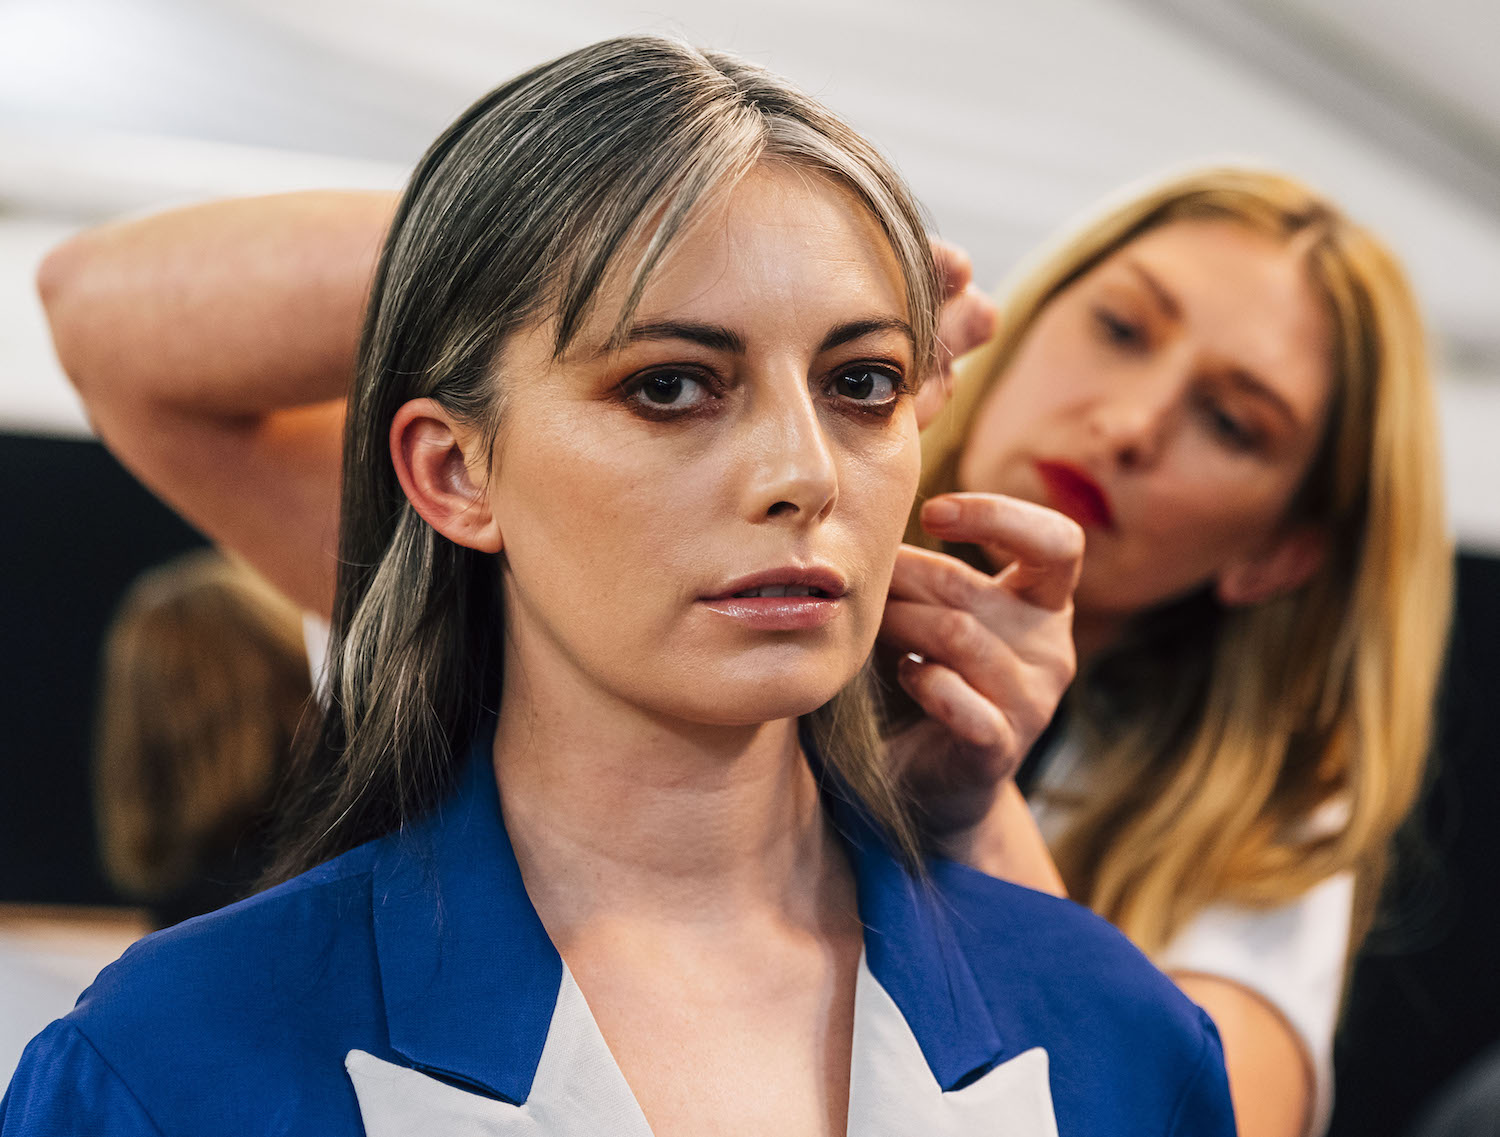 Three major hair & beauty trends sweeping NZ in 2019